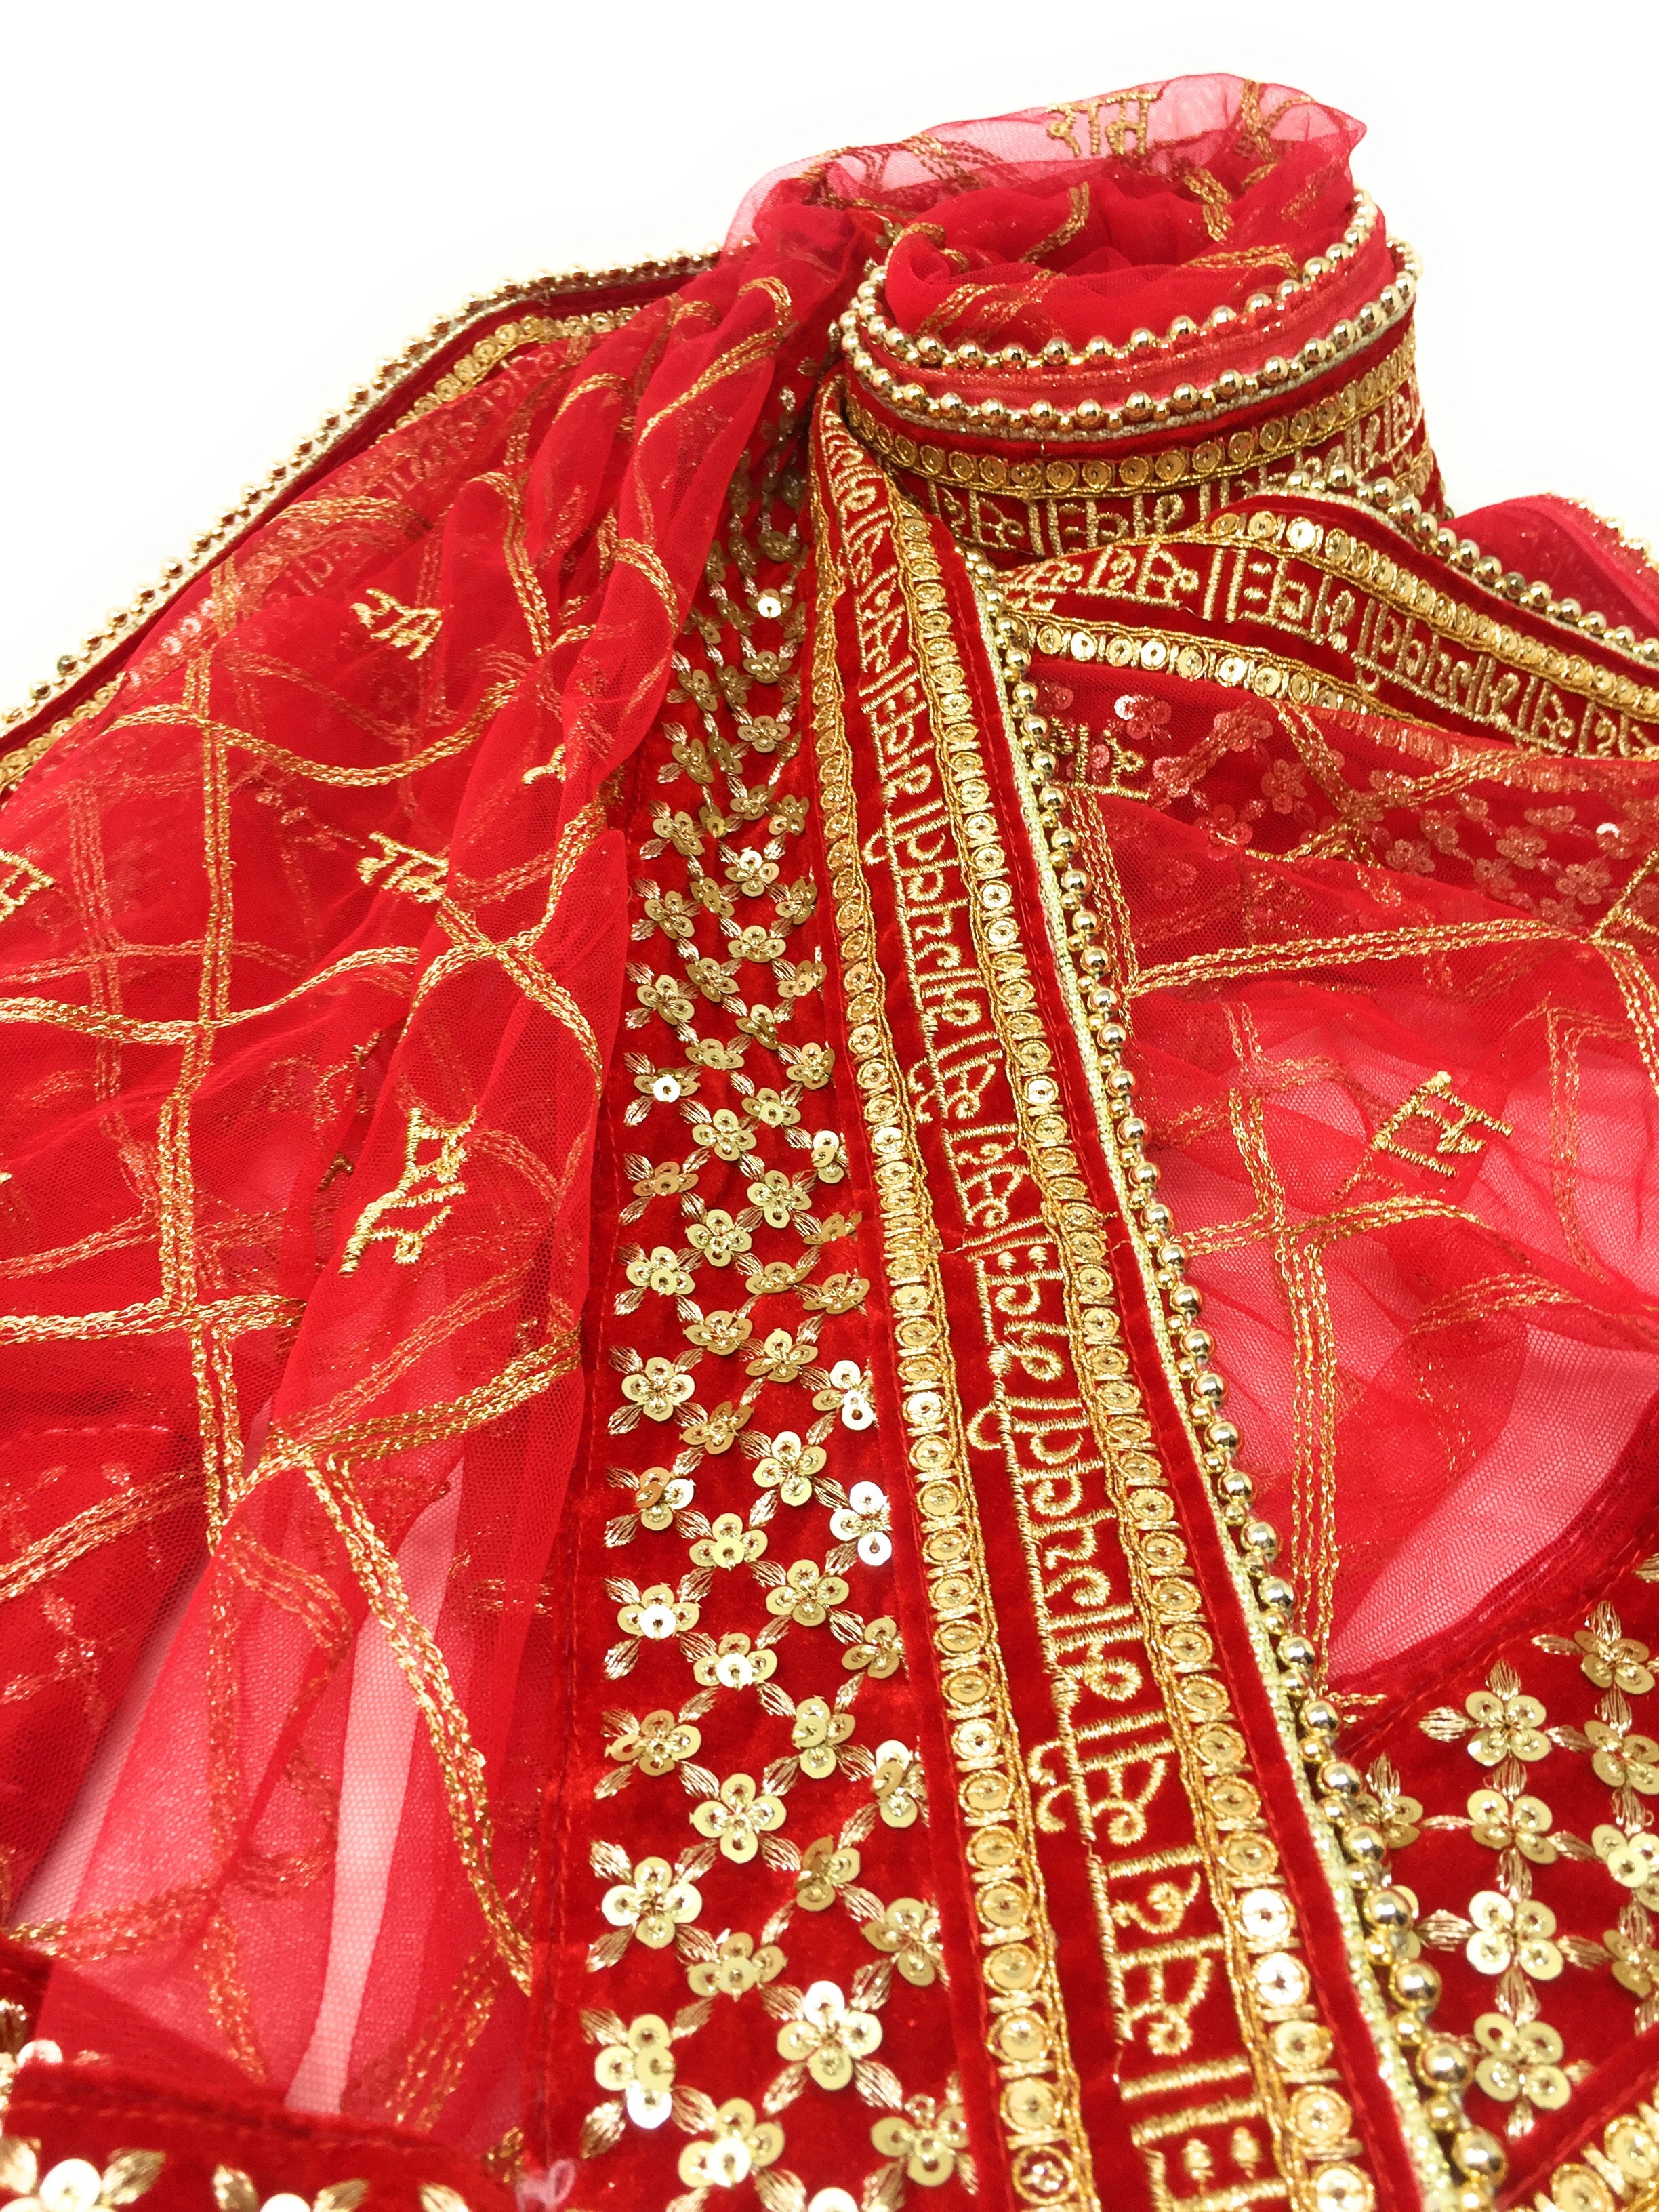 Bridal Chunri Buy online Get Red Bridal Chunri at best price